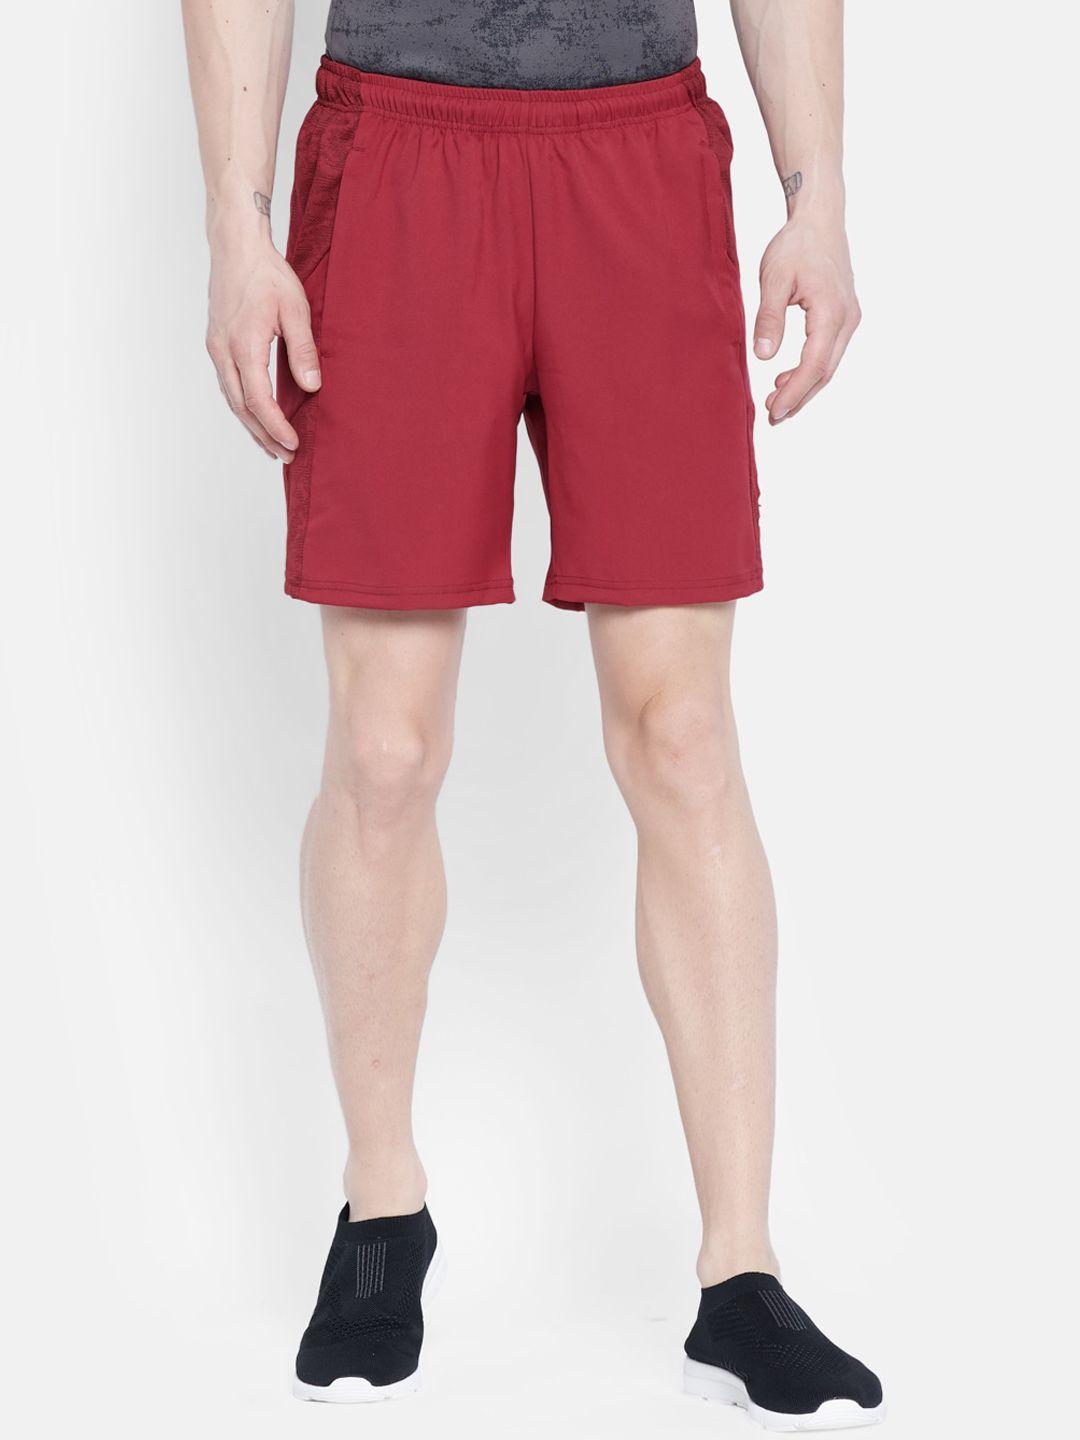 rock-it-men-maroon-mid-rise-sports-shorts